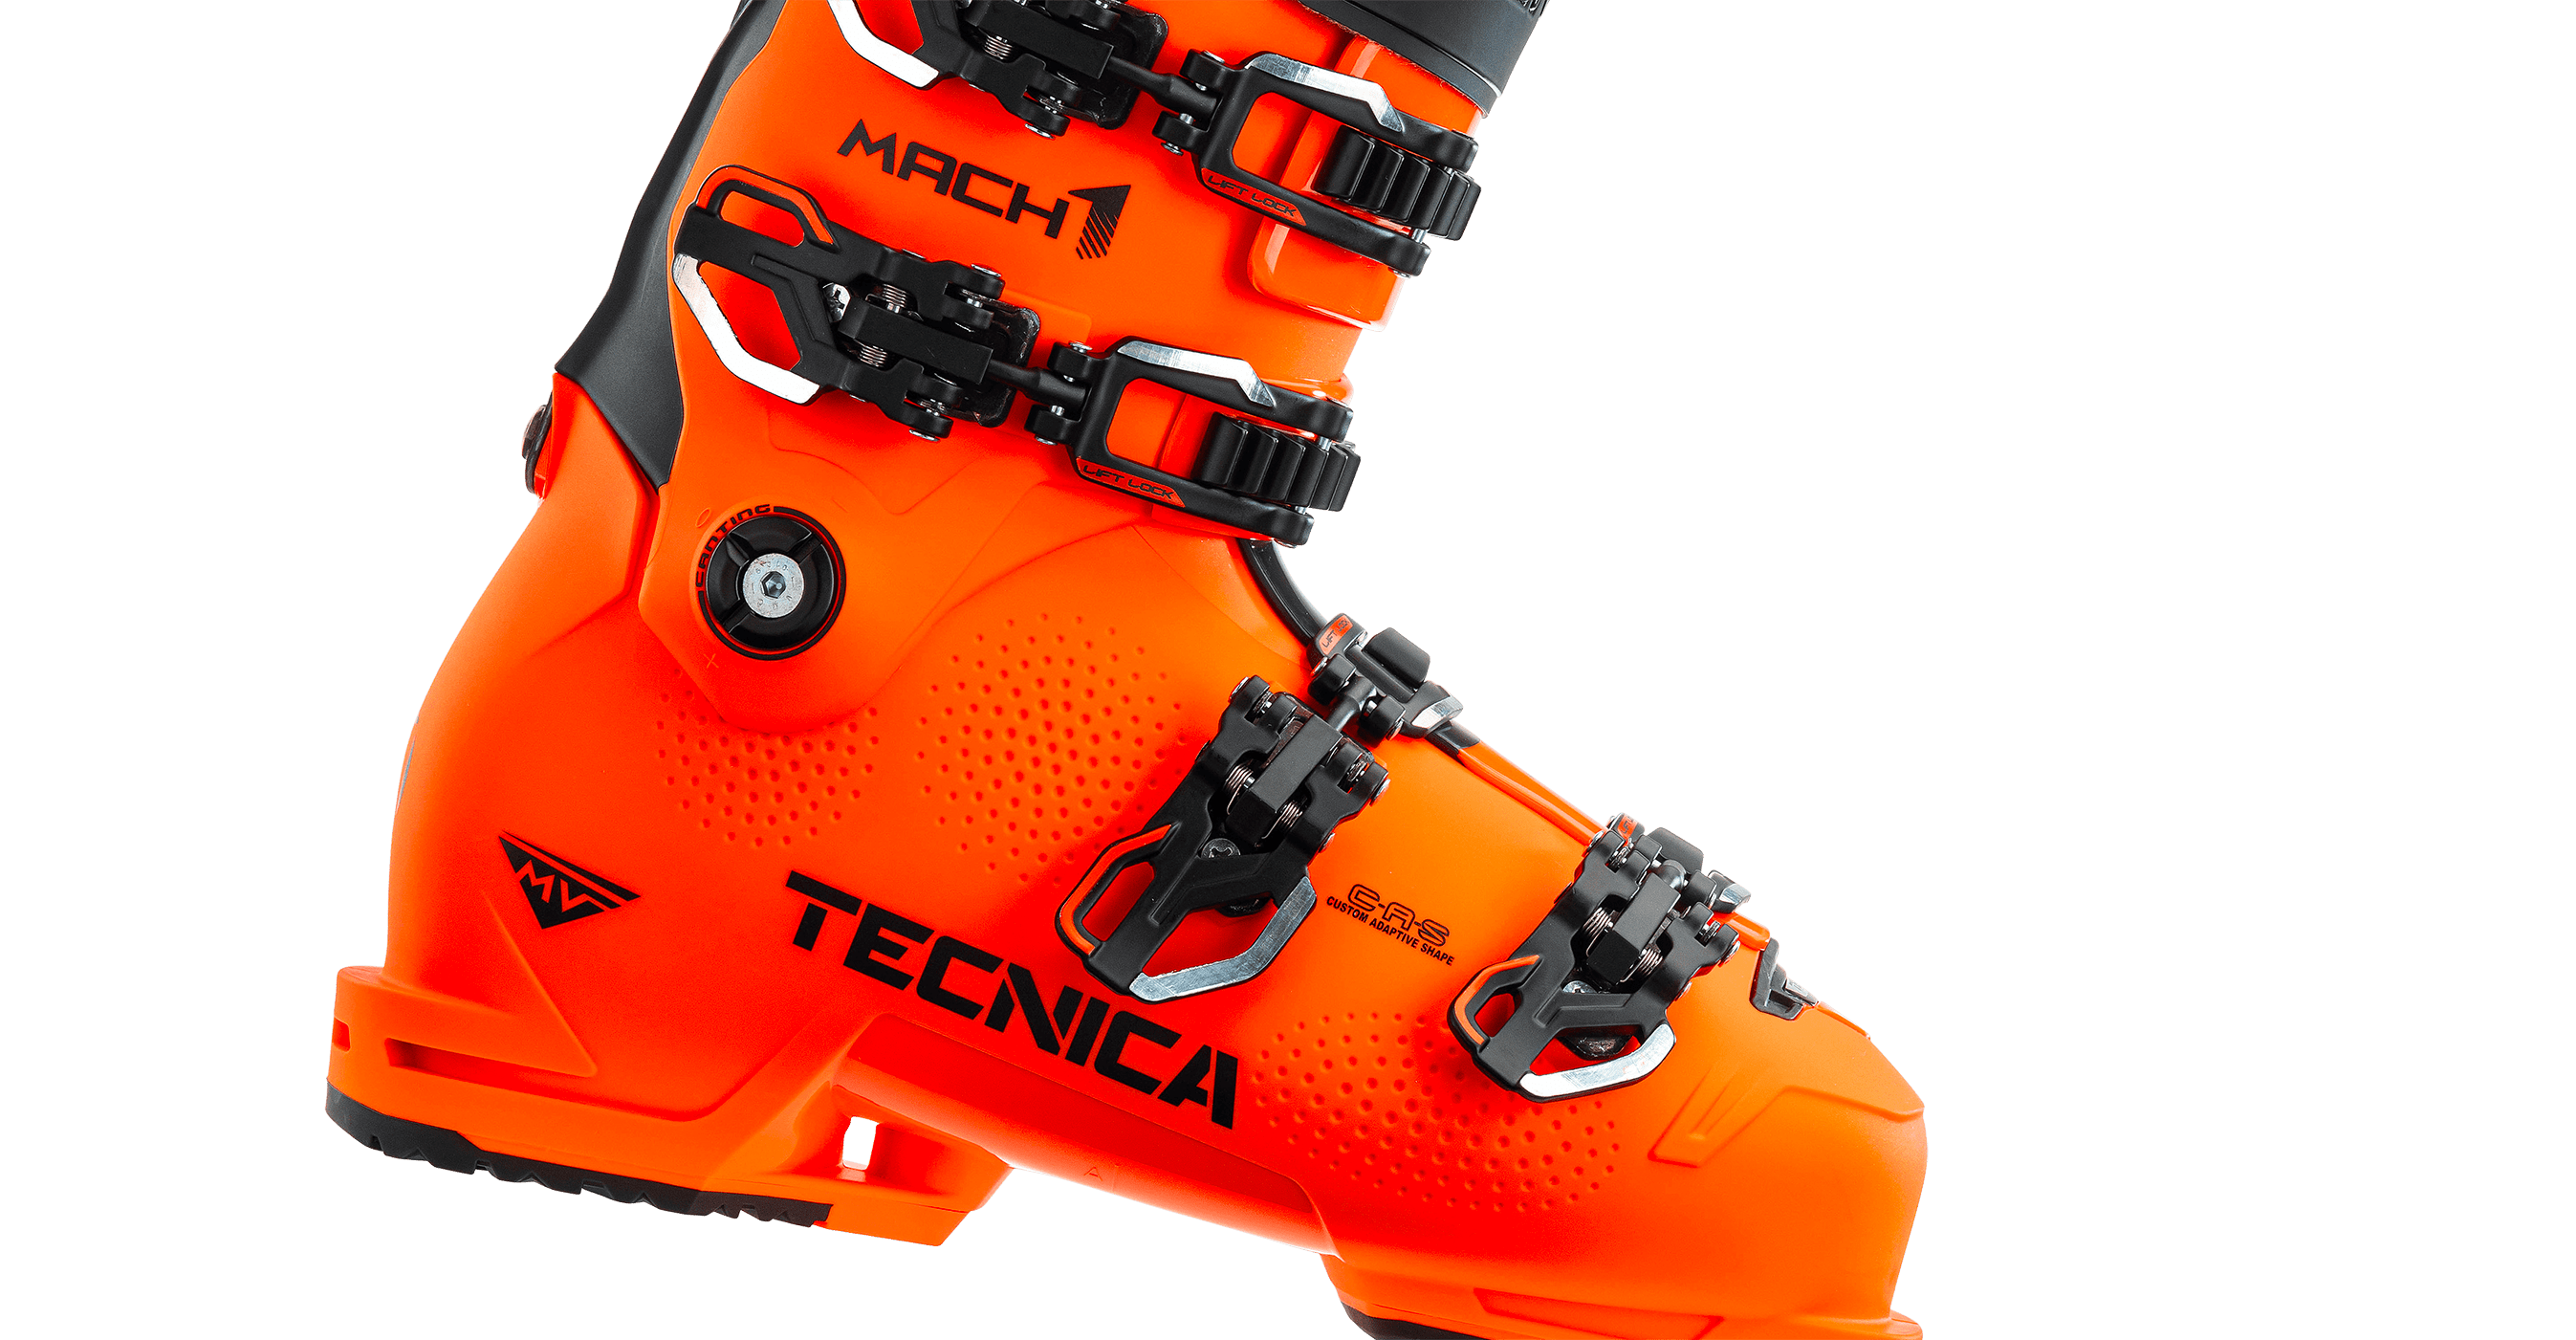 Tecnica Mach1 MV 130 Ski Boot 2020